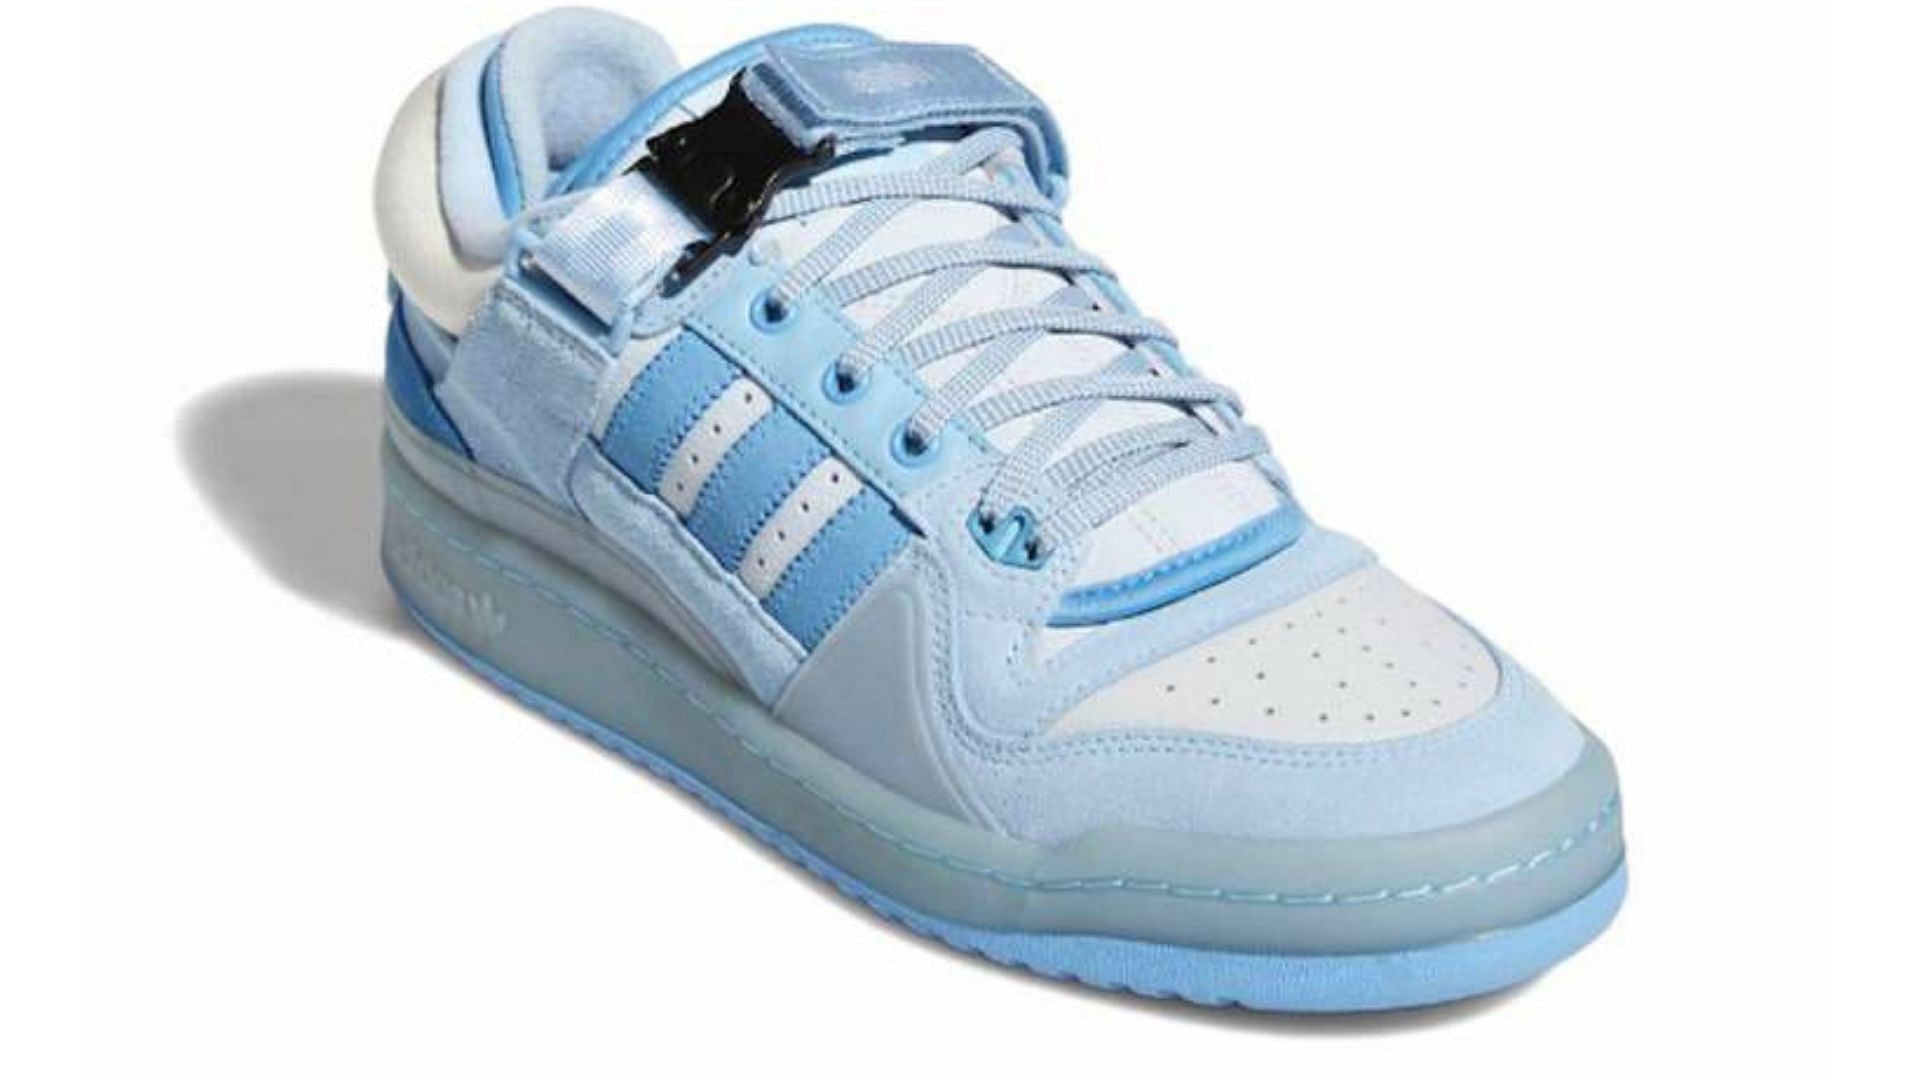 Bad Bunny x Adidas Forum Low Buckle Blue Tint shoes (Image via Adidas)